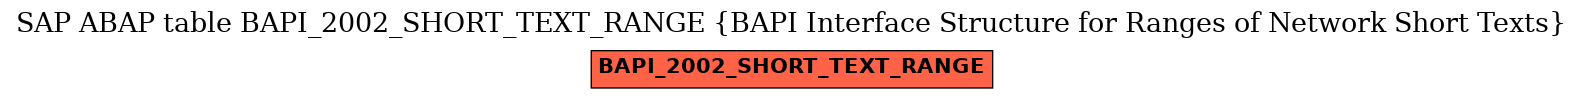 E-R Diagram for table BAPI_2002_SHORT_TEXT_RANGE (BAPI Interface Structure for Ranges of Network Short Texts)